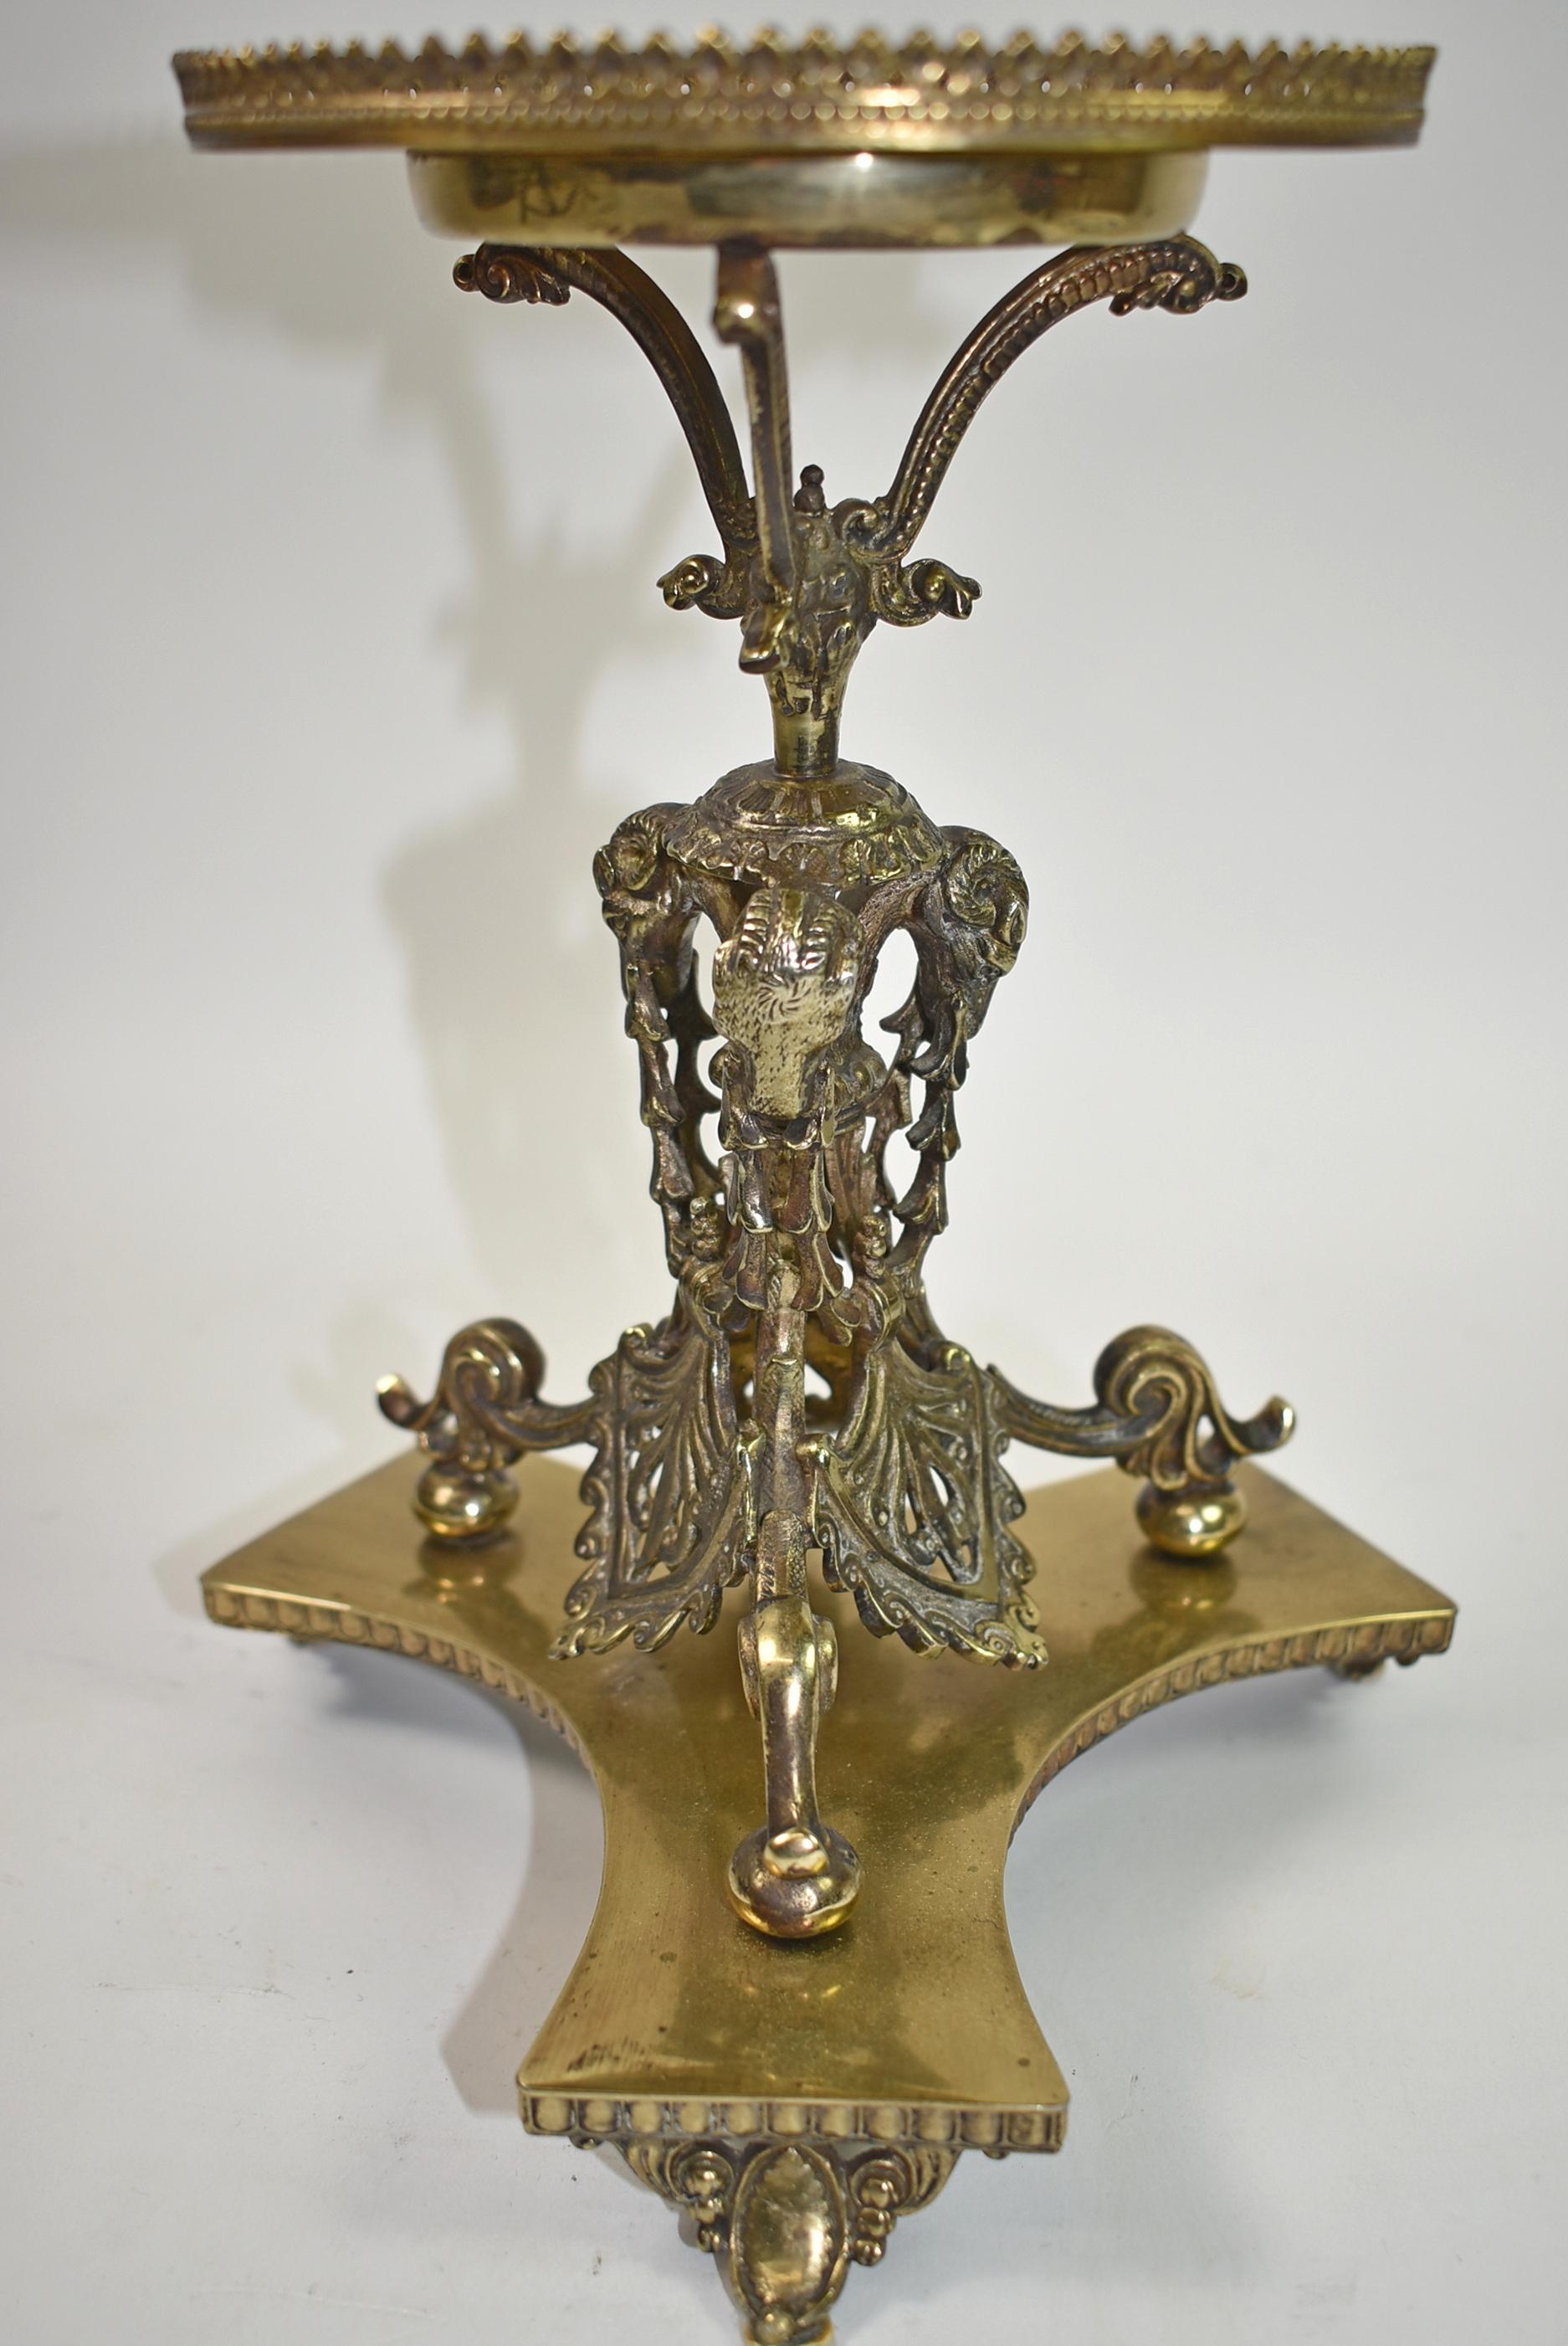 Tazza Brass Center Pedestal with Decorative Meissen Bowl For Sale 2